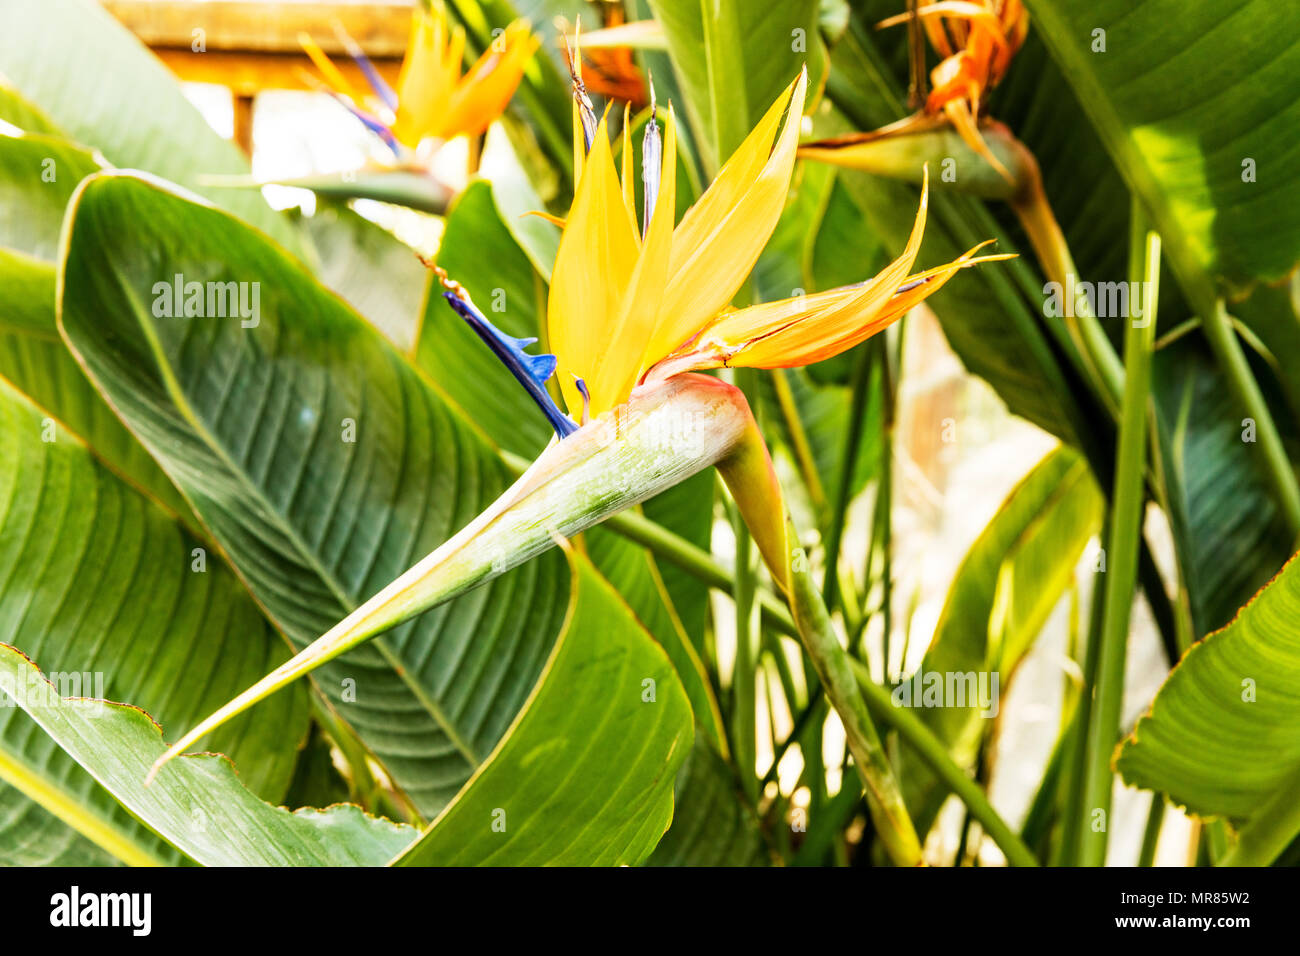 Bird of paradise flower, Strelitzia reginae, einkeimblättrige Pflanze, Bird of paradise, Bird of paradise Pflanze, Gattung Strelitzien, exotische Stockfoto